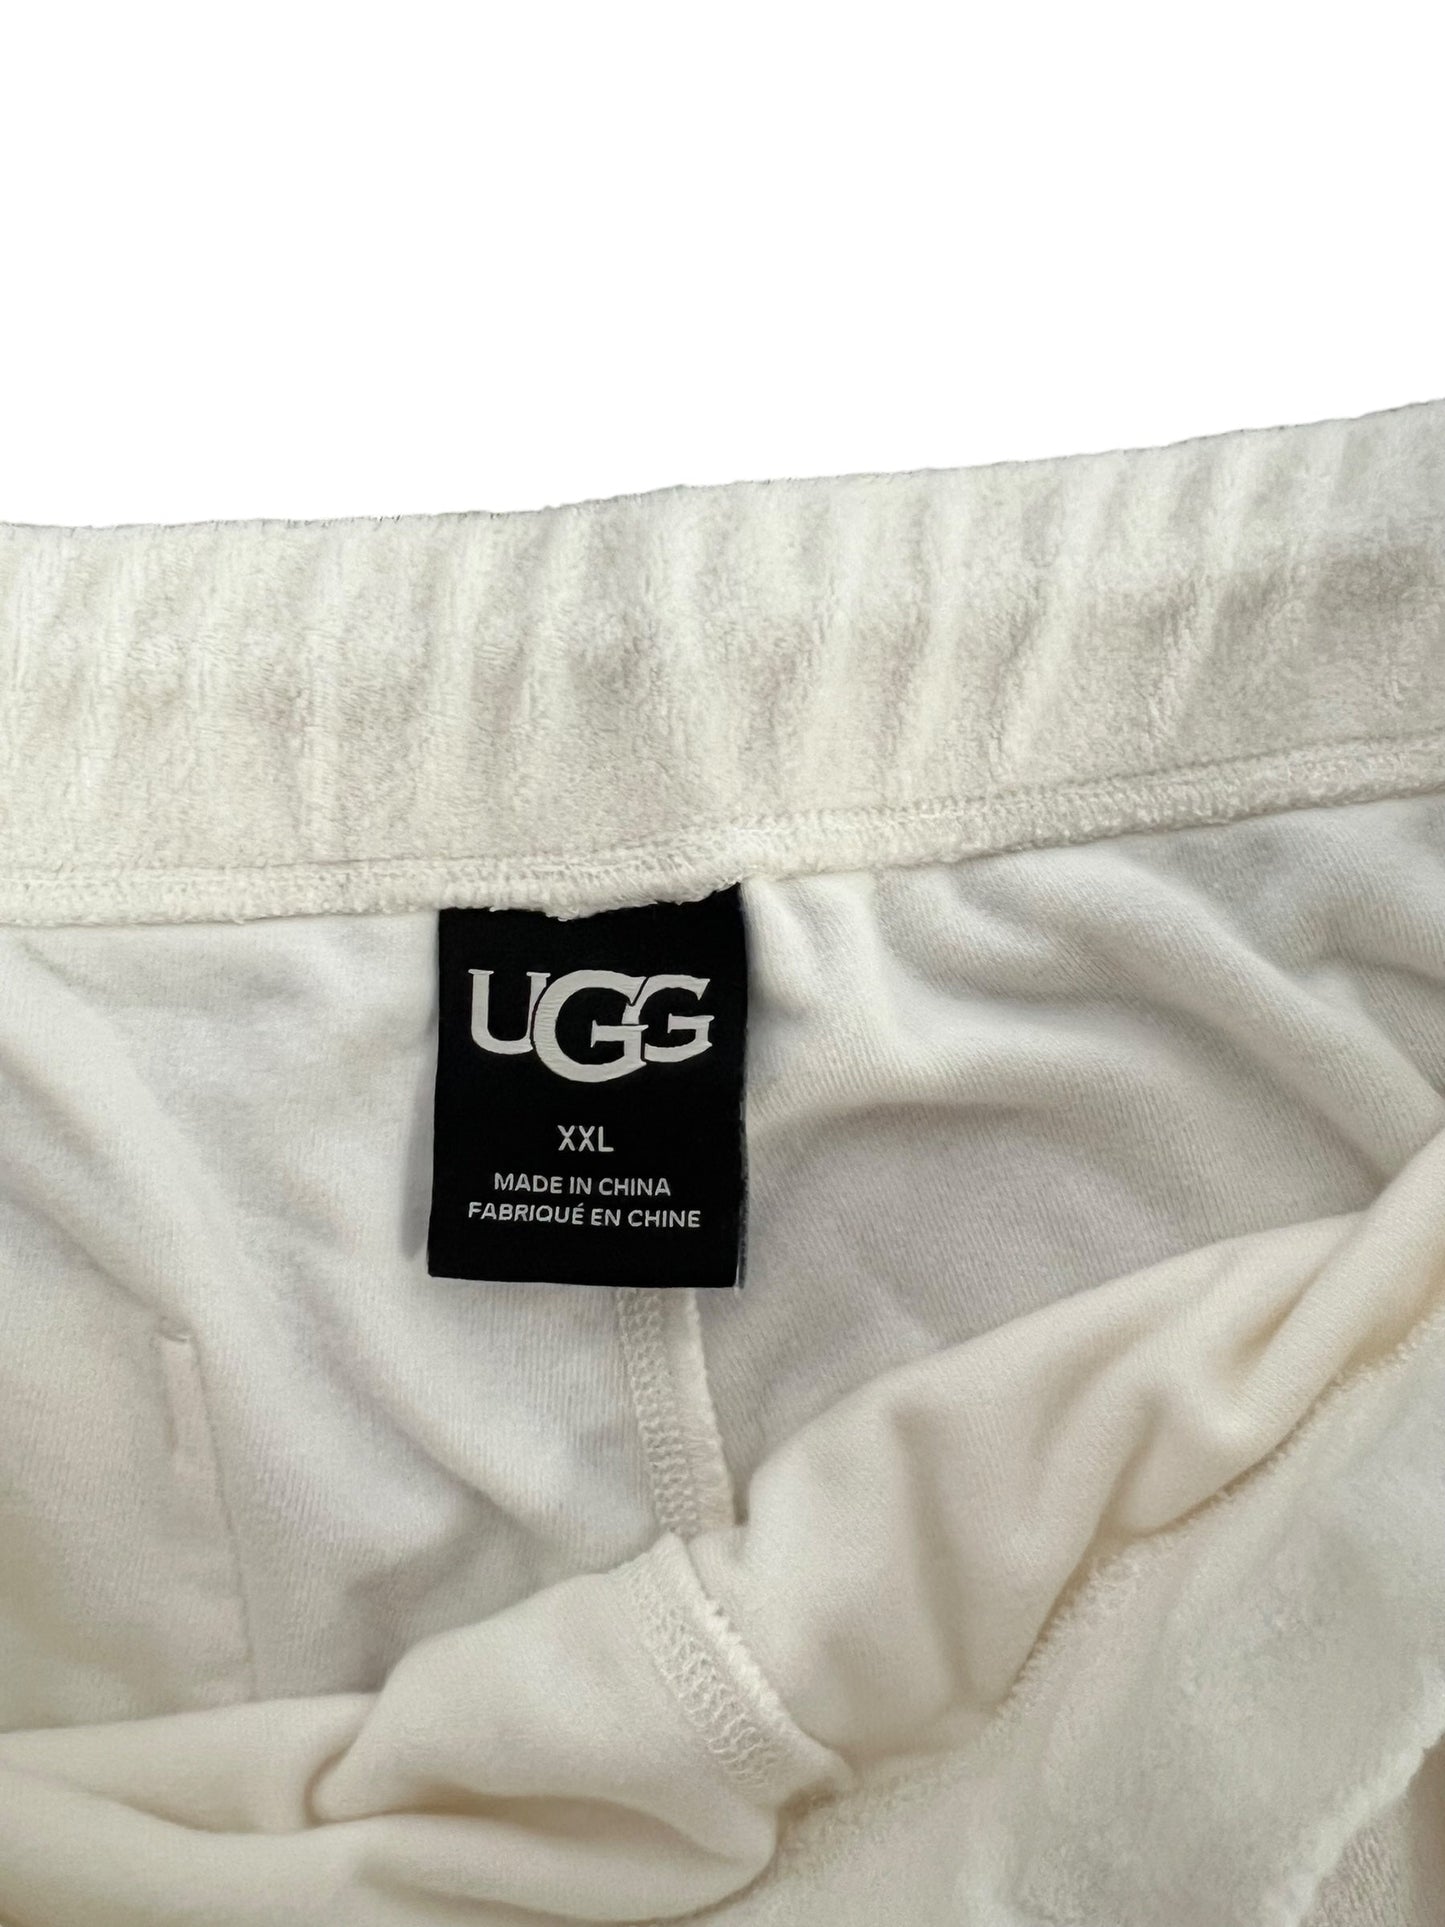 White Pants Joggers Ugg, Size Xxl